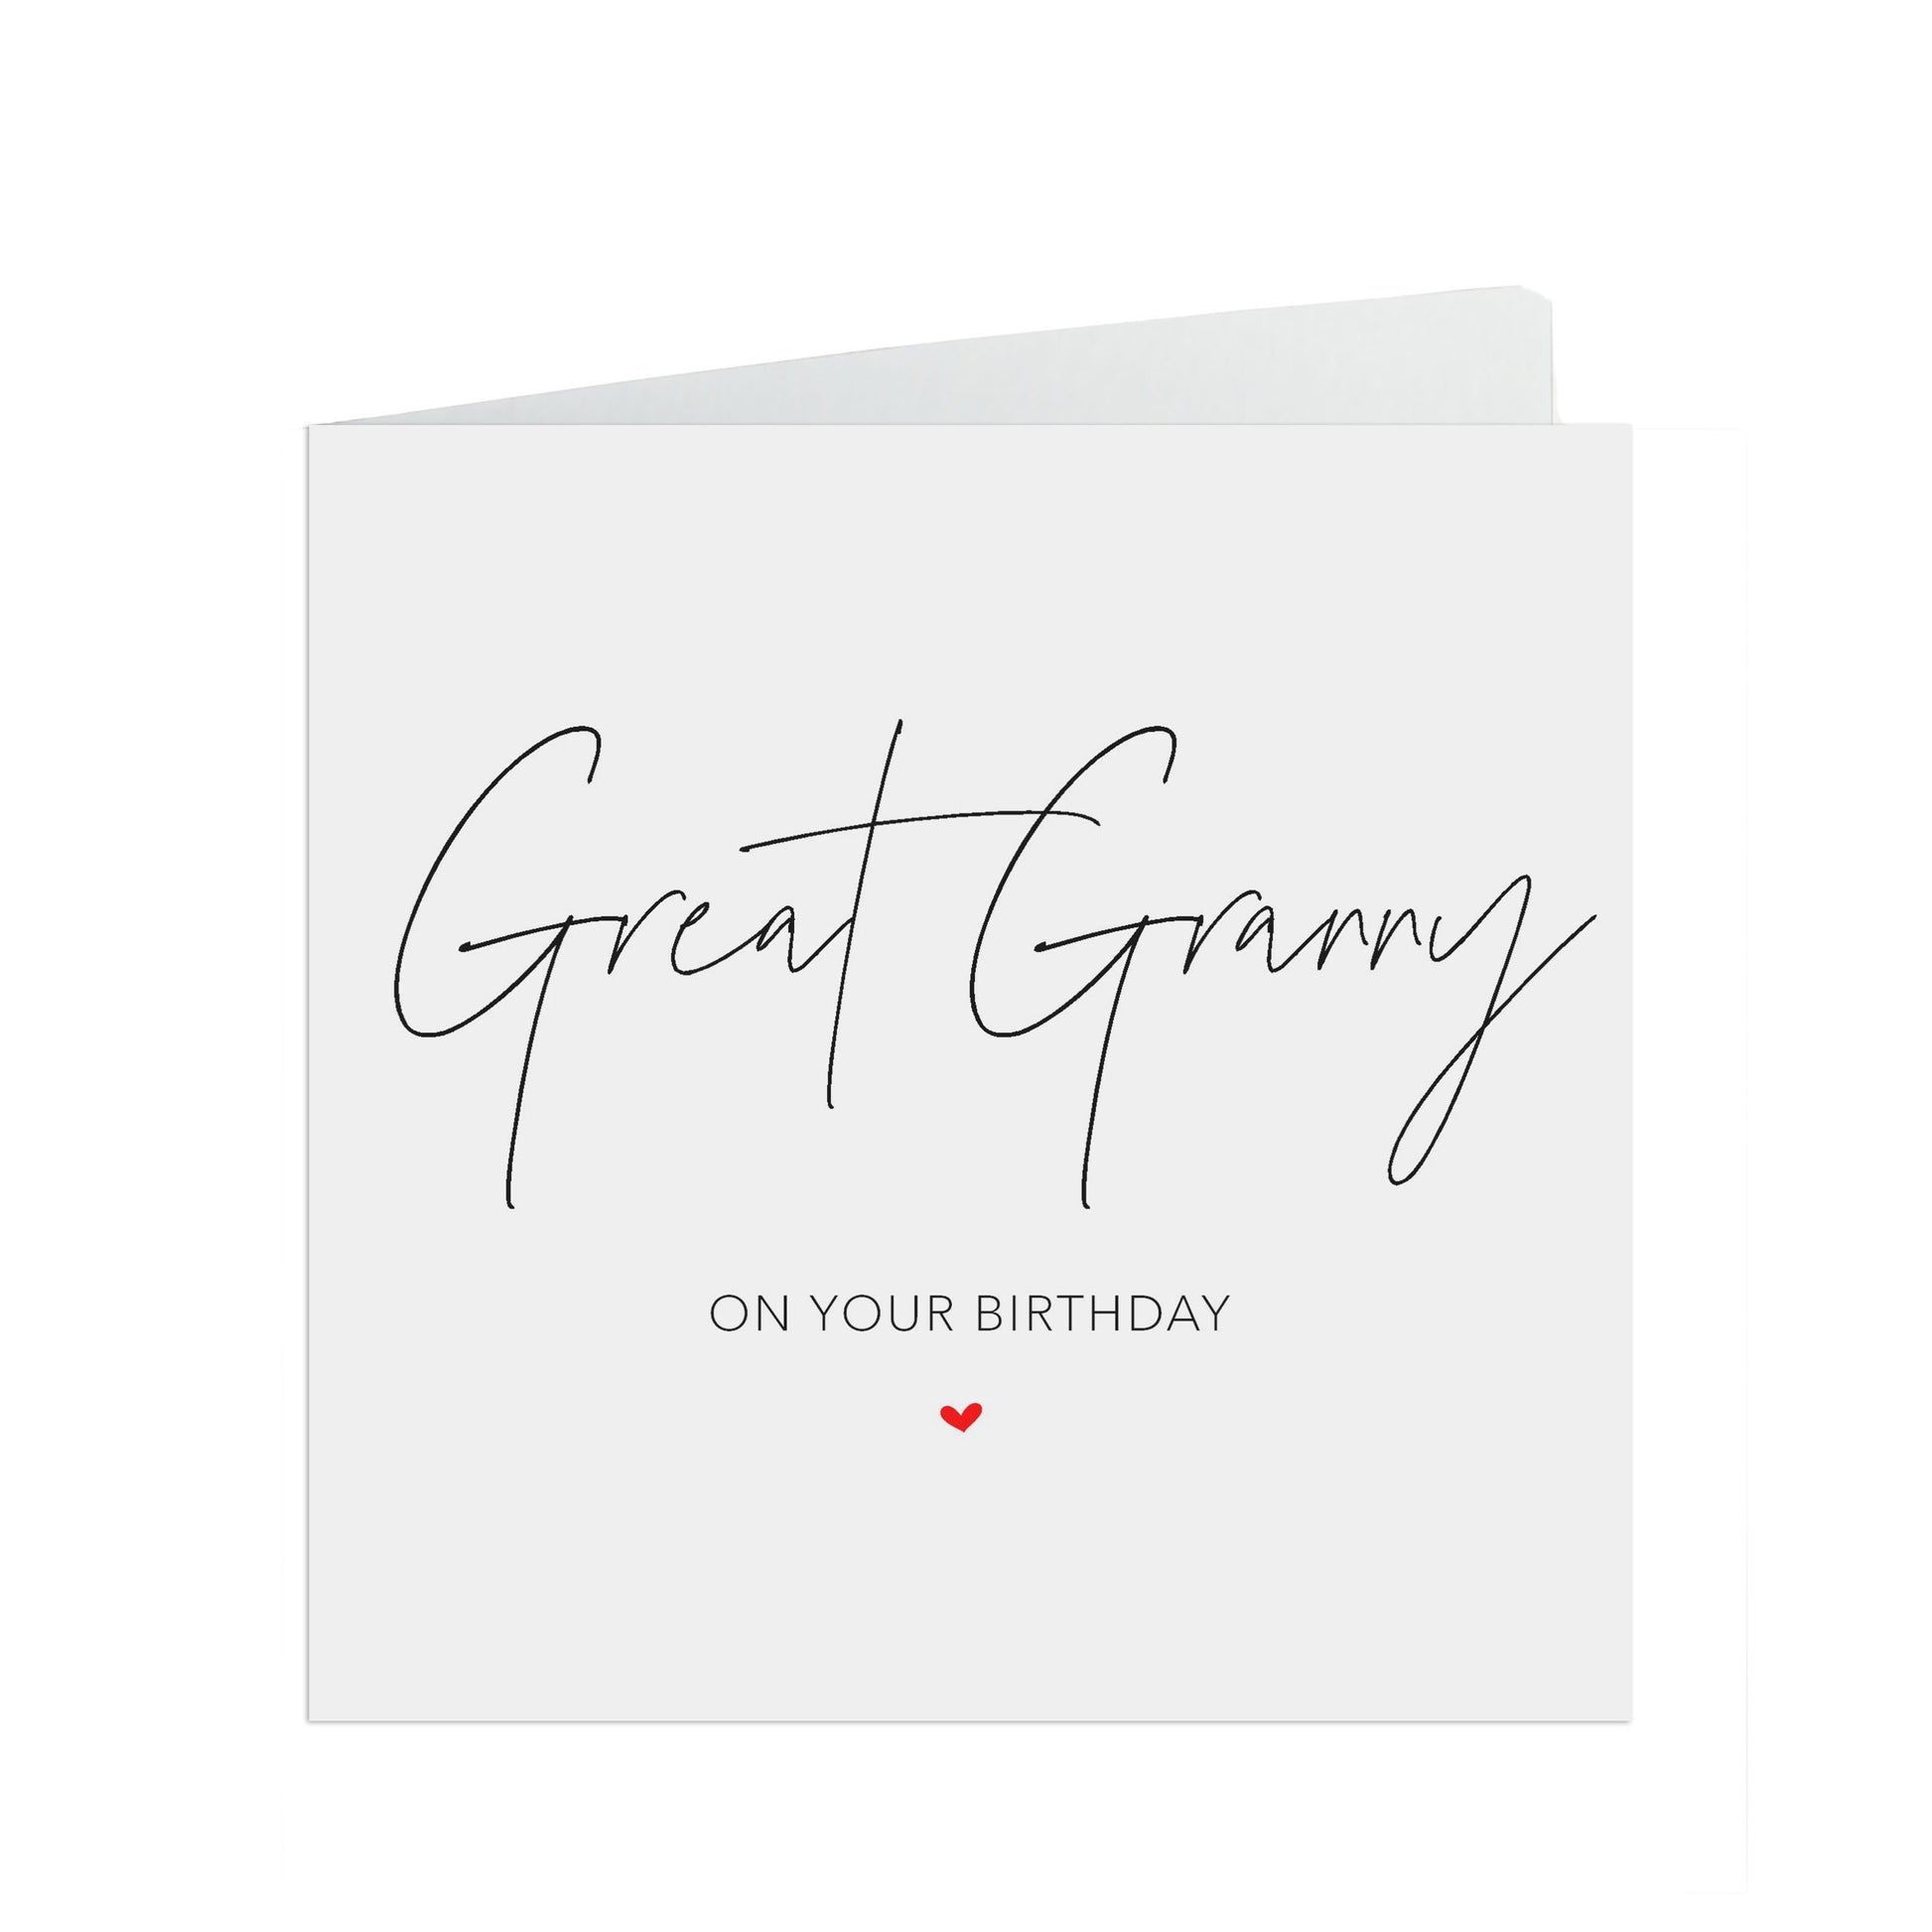 Great Granny Birthday Card, Simple Birthday Card